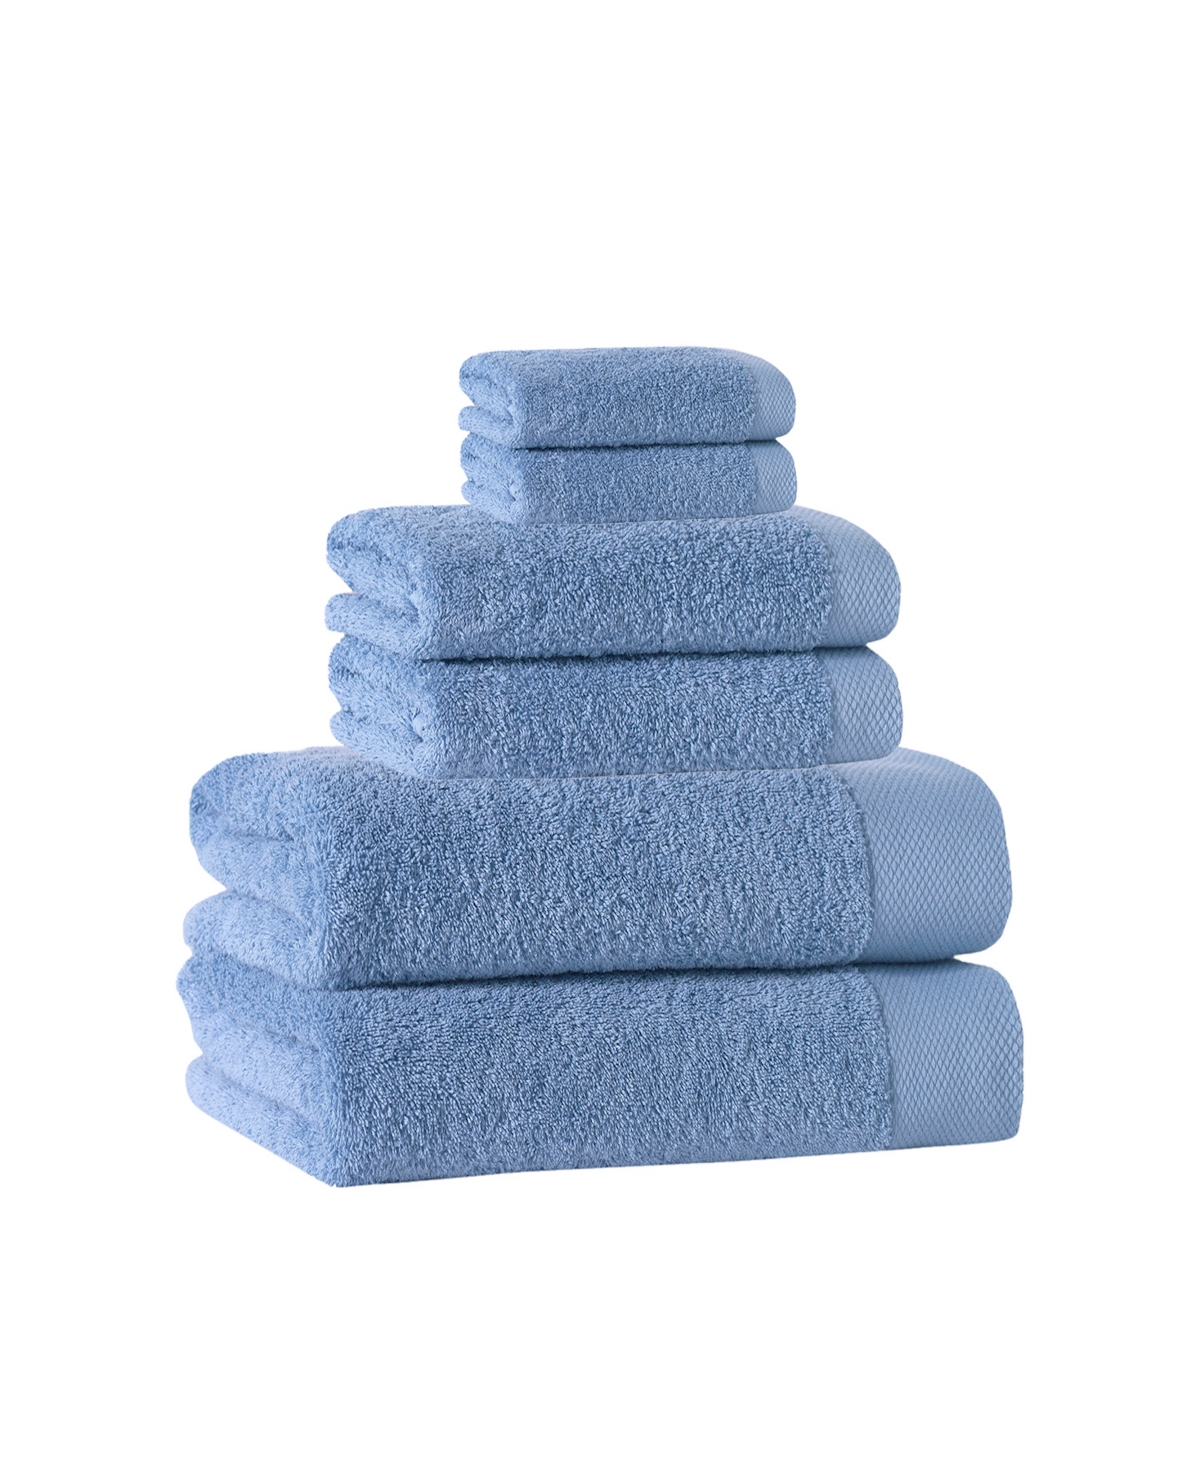 Enchante Home Signature 6-pc. Turkish Cotton Towel Set In Turquoise